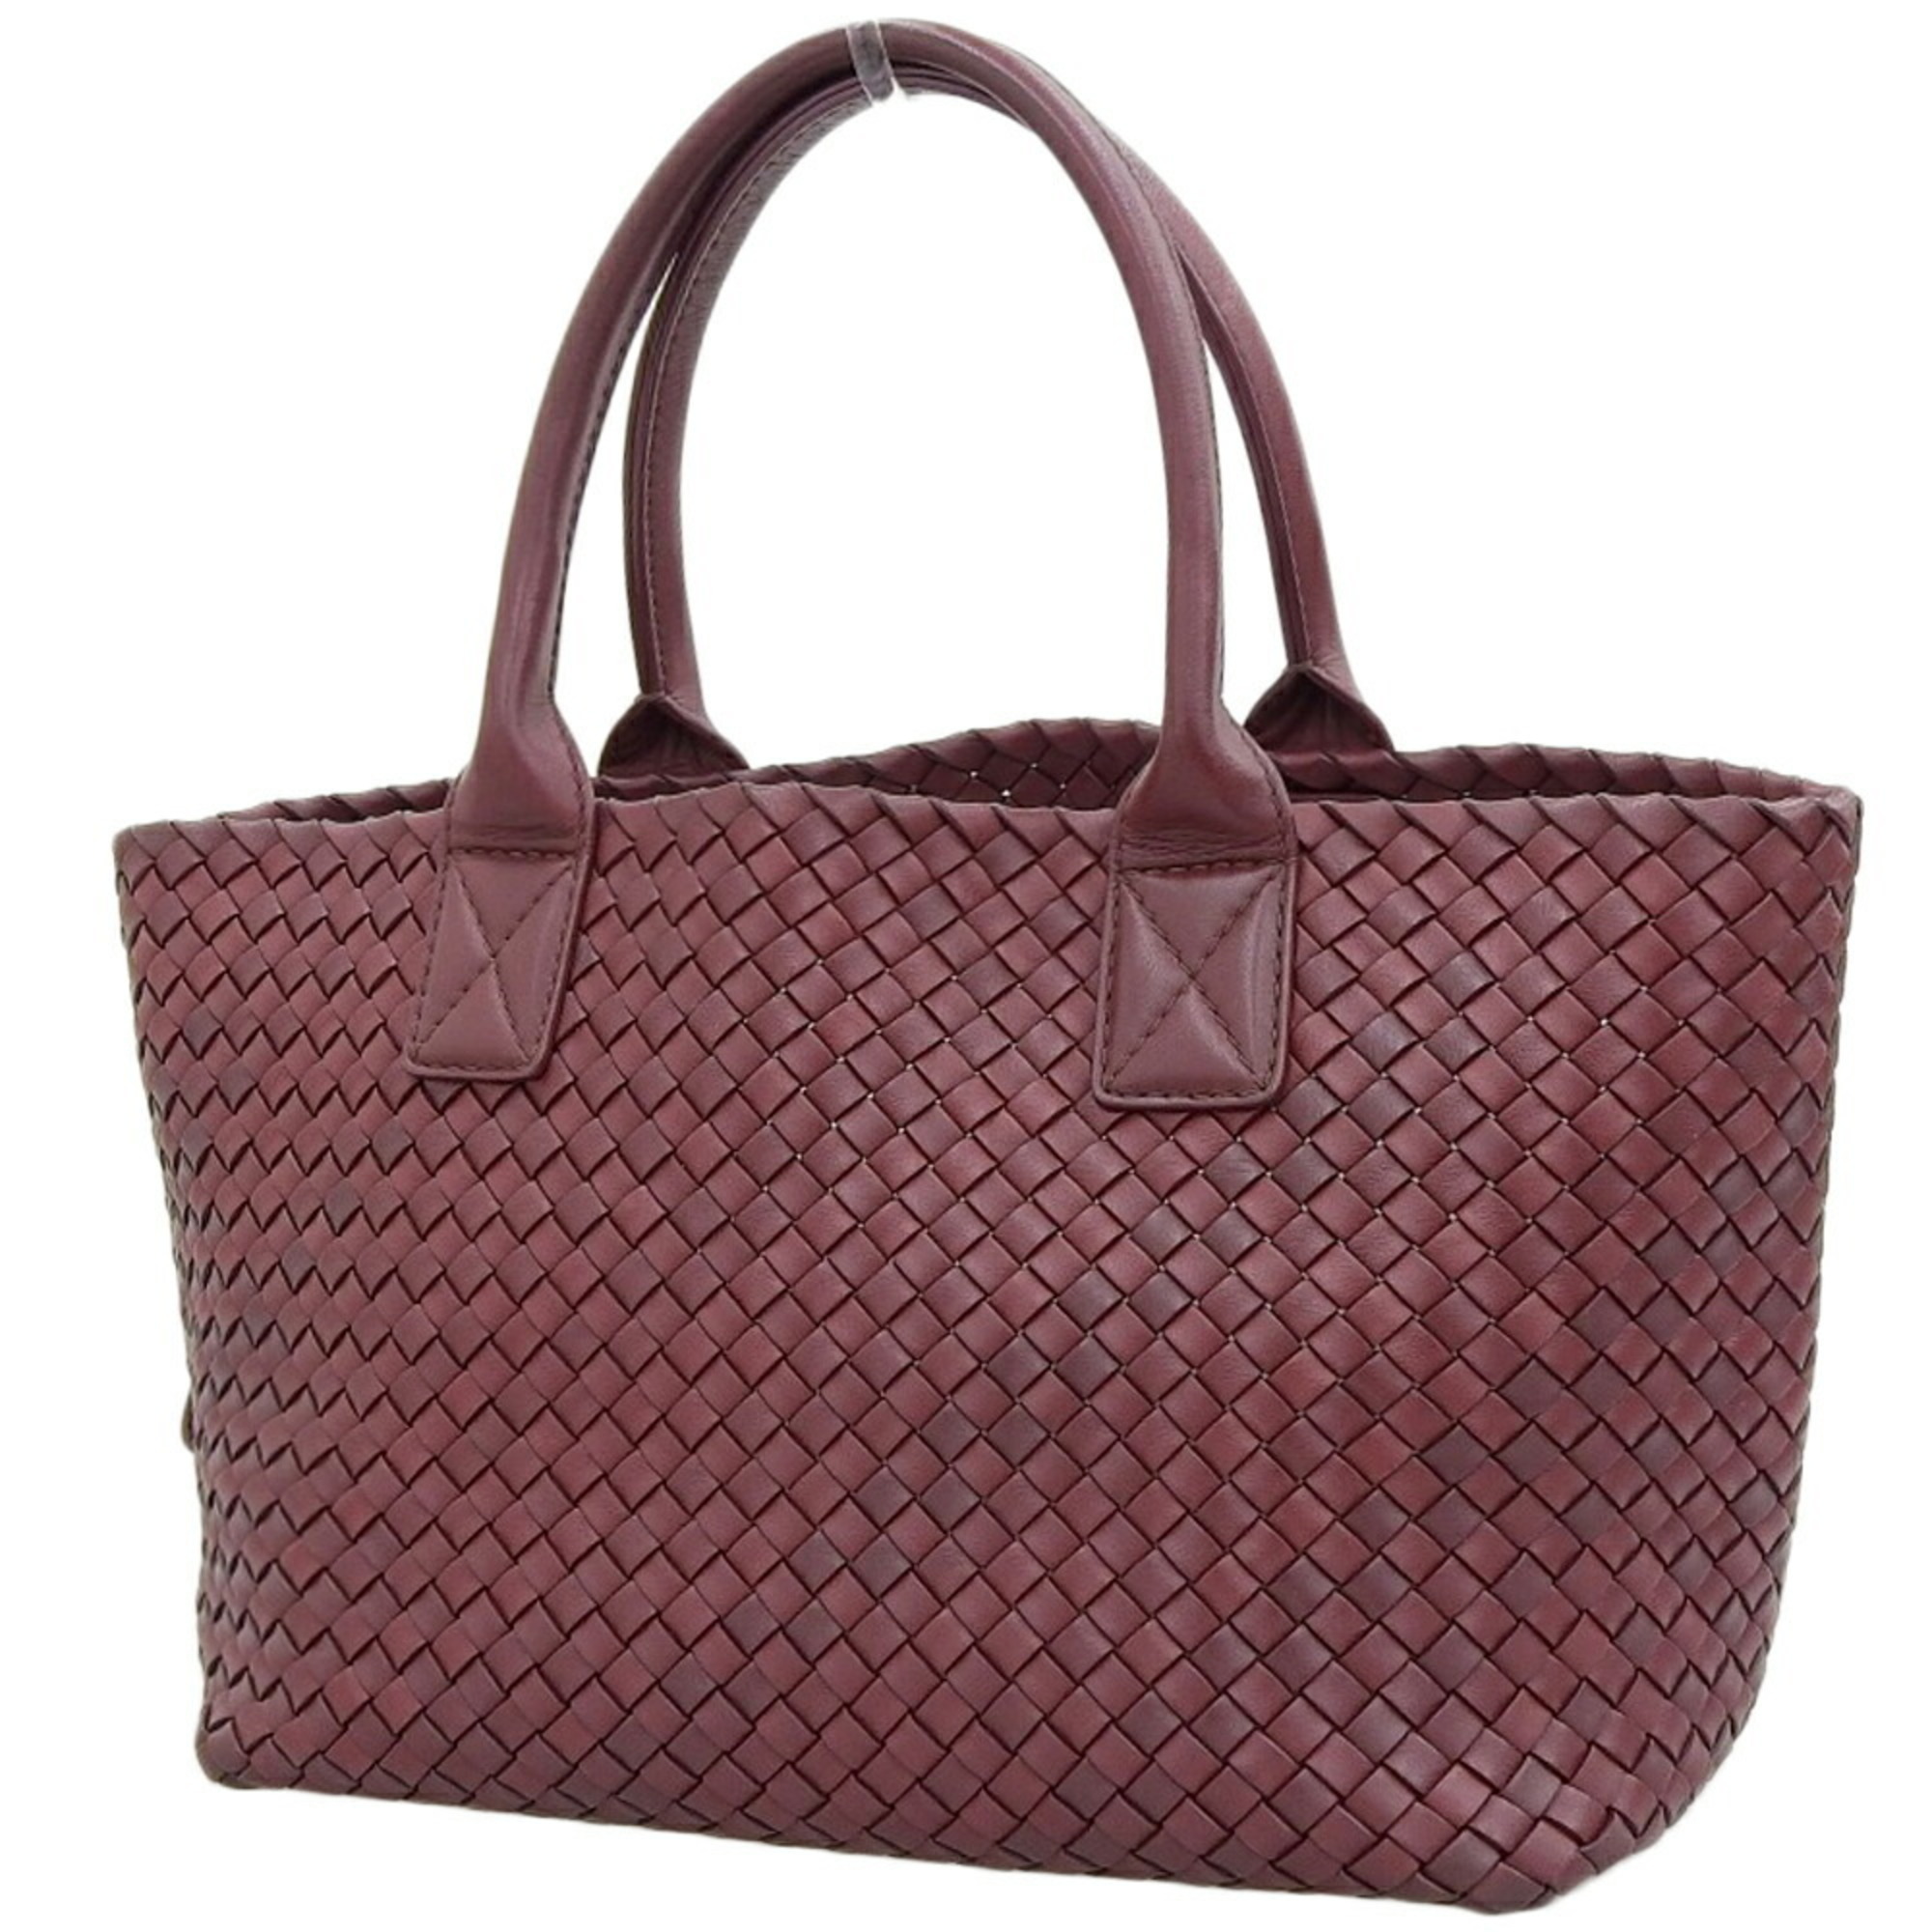 BOTTEGA VENETA Intrecciato Cava MM Handbag Tote Bag Leather Bordeaux 115664